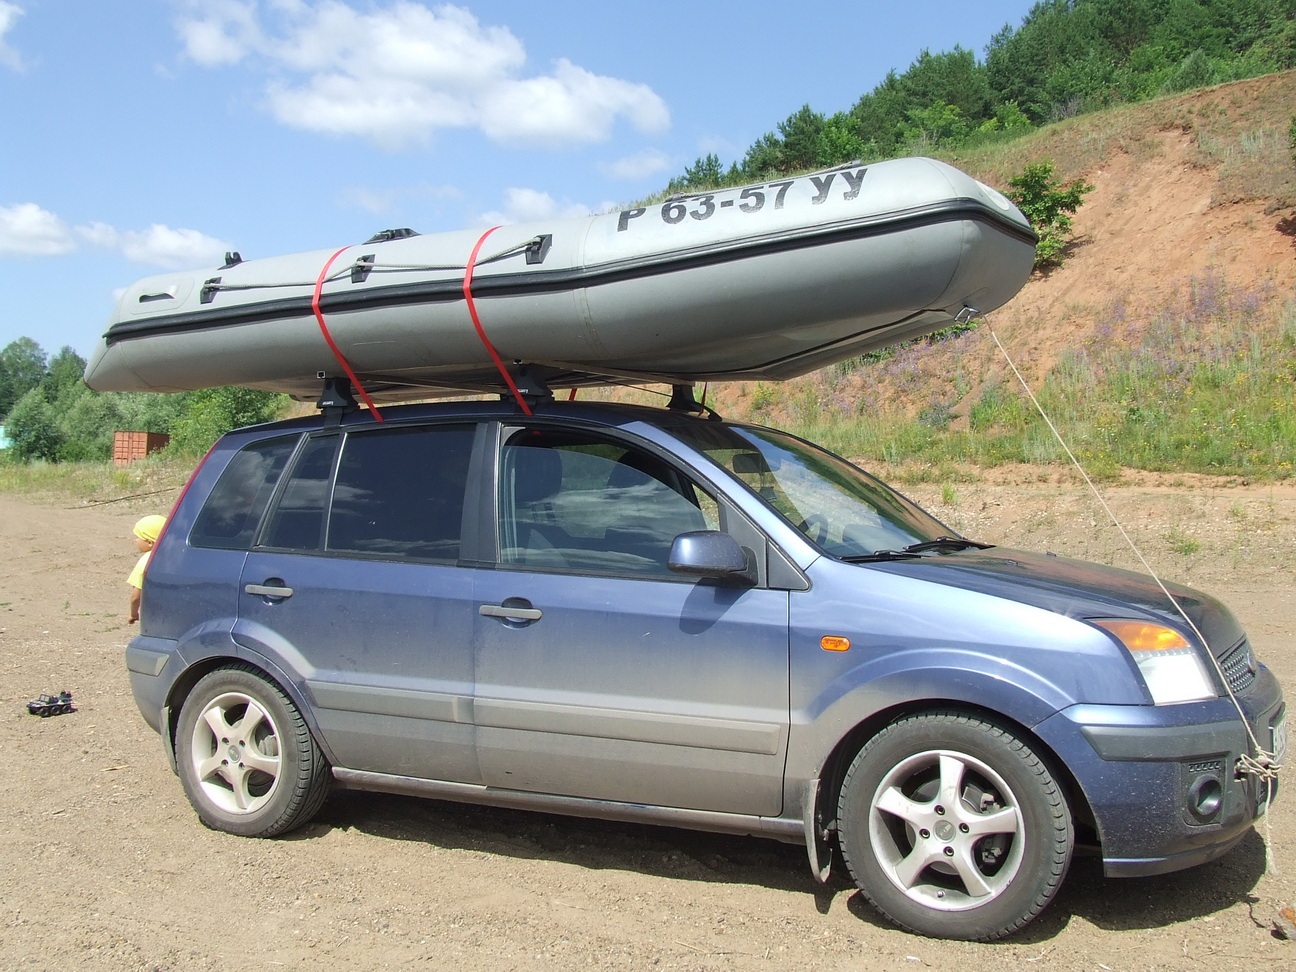 Багажник для перевозки лодки на крыше автомобиля своими руками